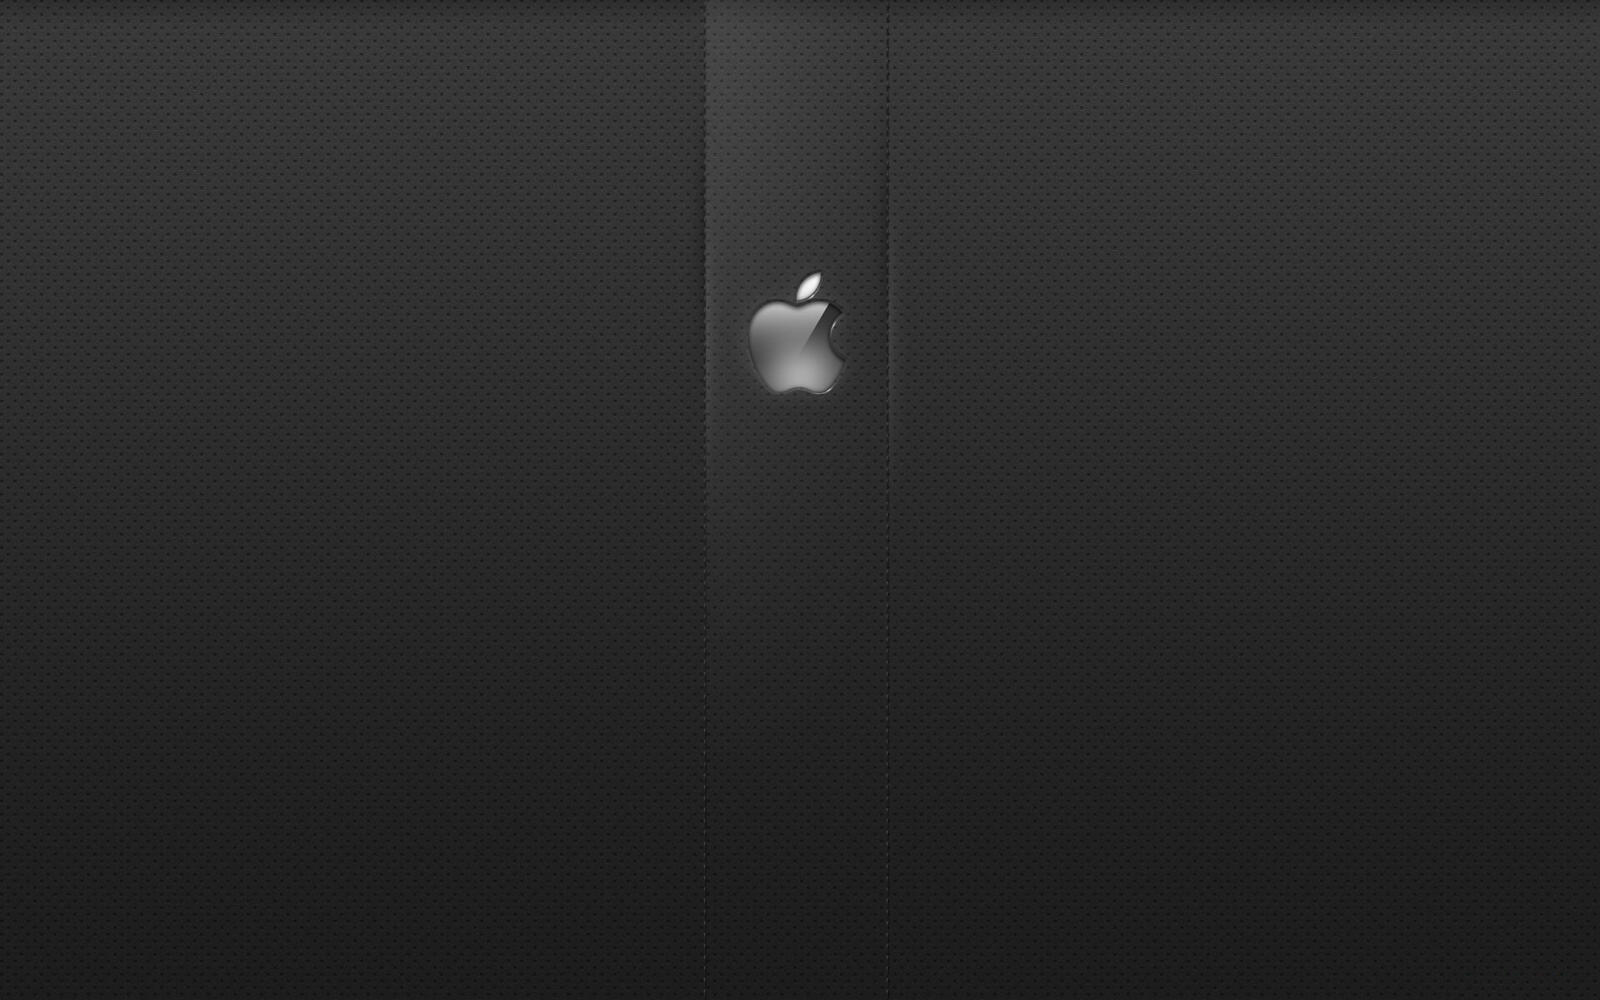 Wallpapers hi-tech apple logo on the desktop